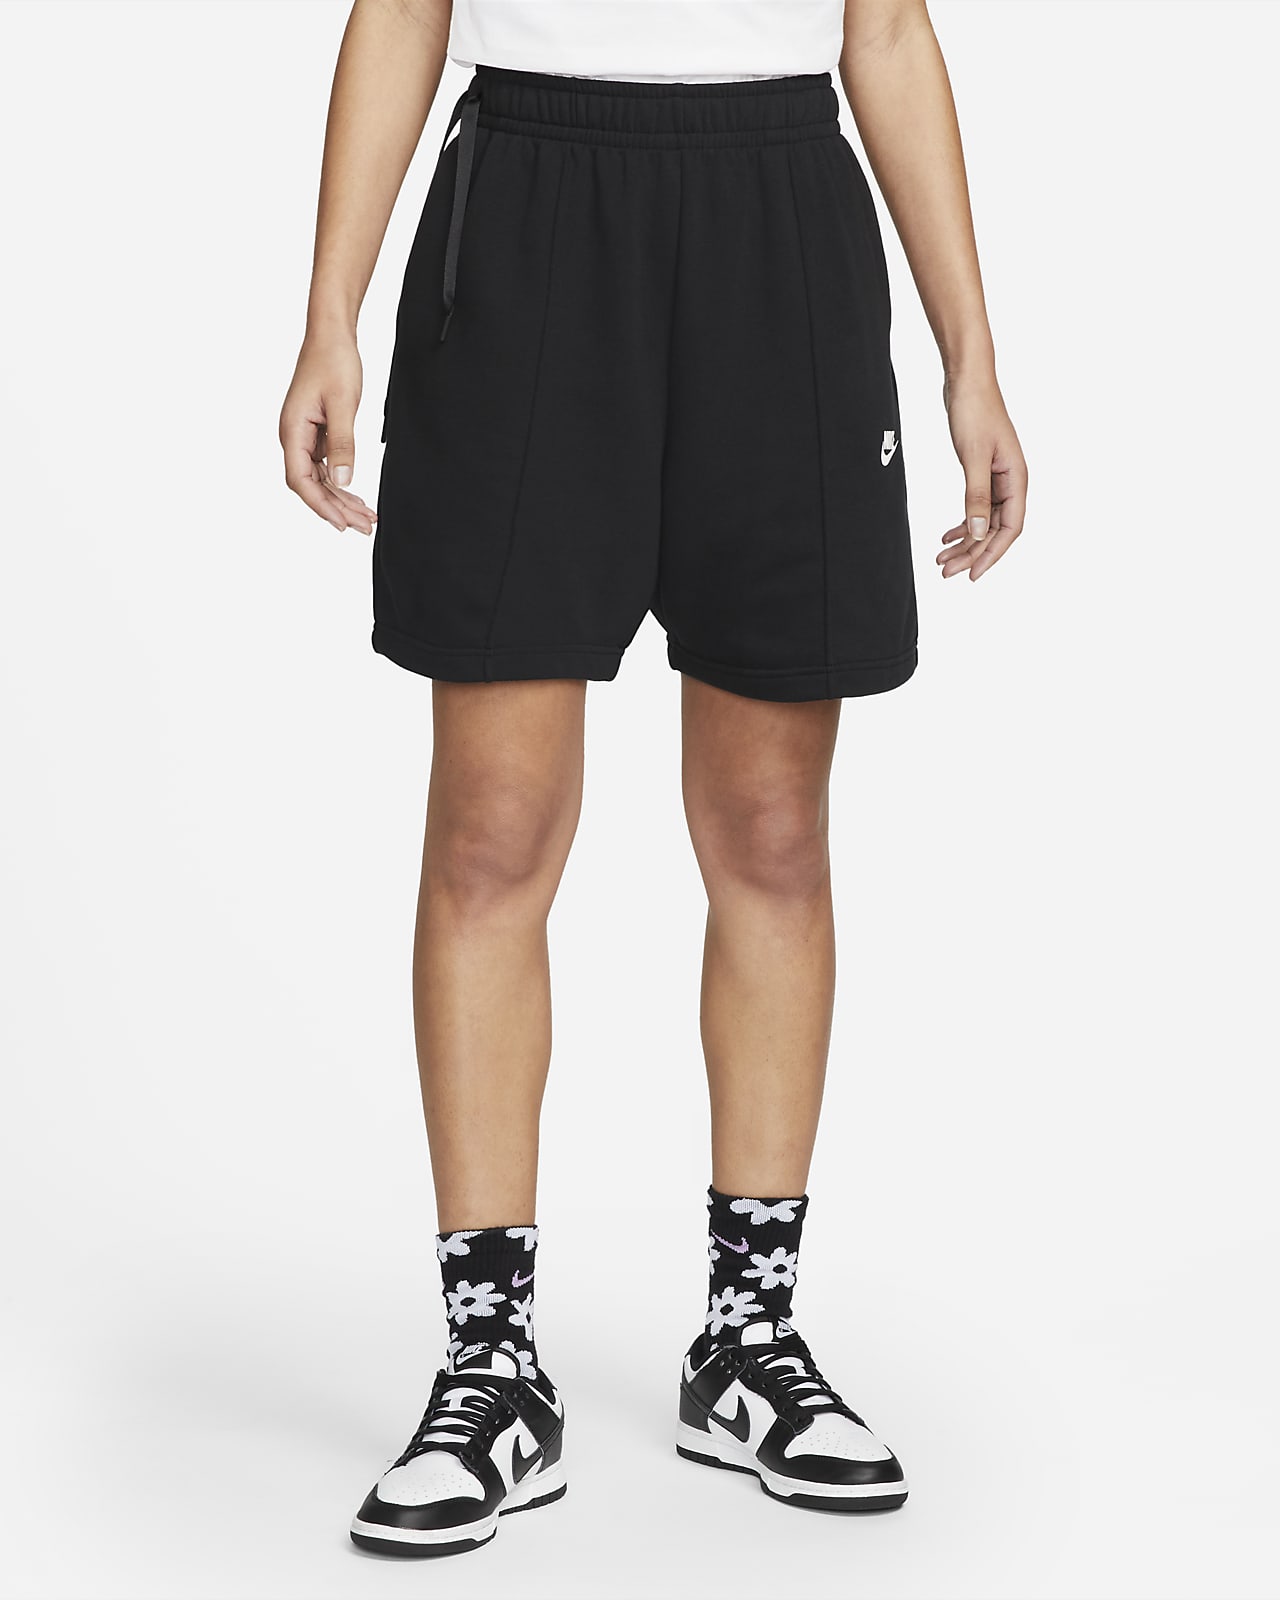 Nike Sportswear magas derekú női polár táncrövidnadrág